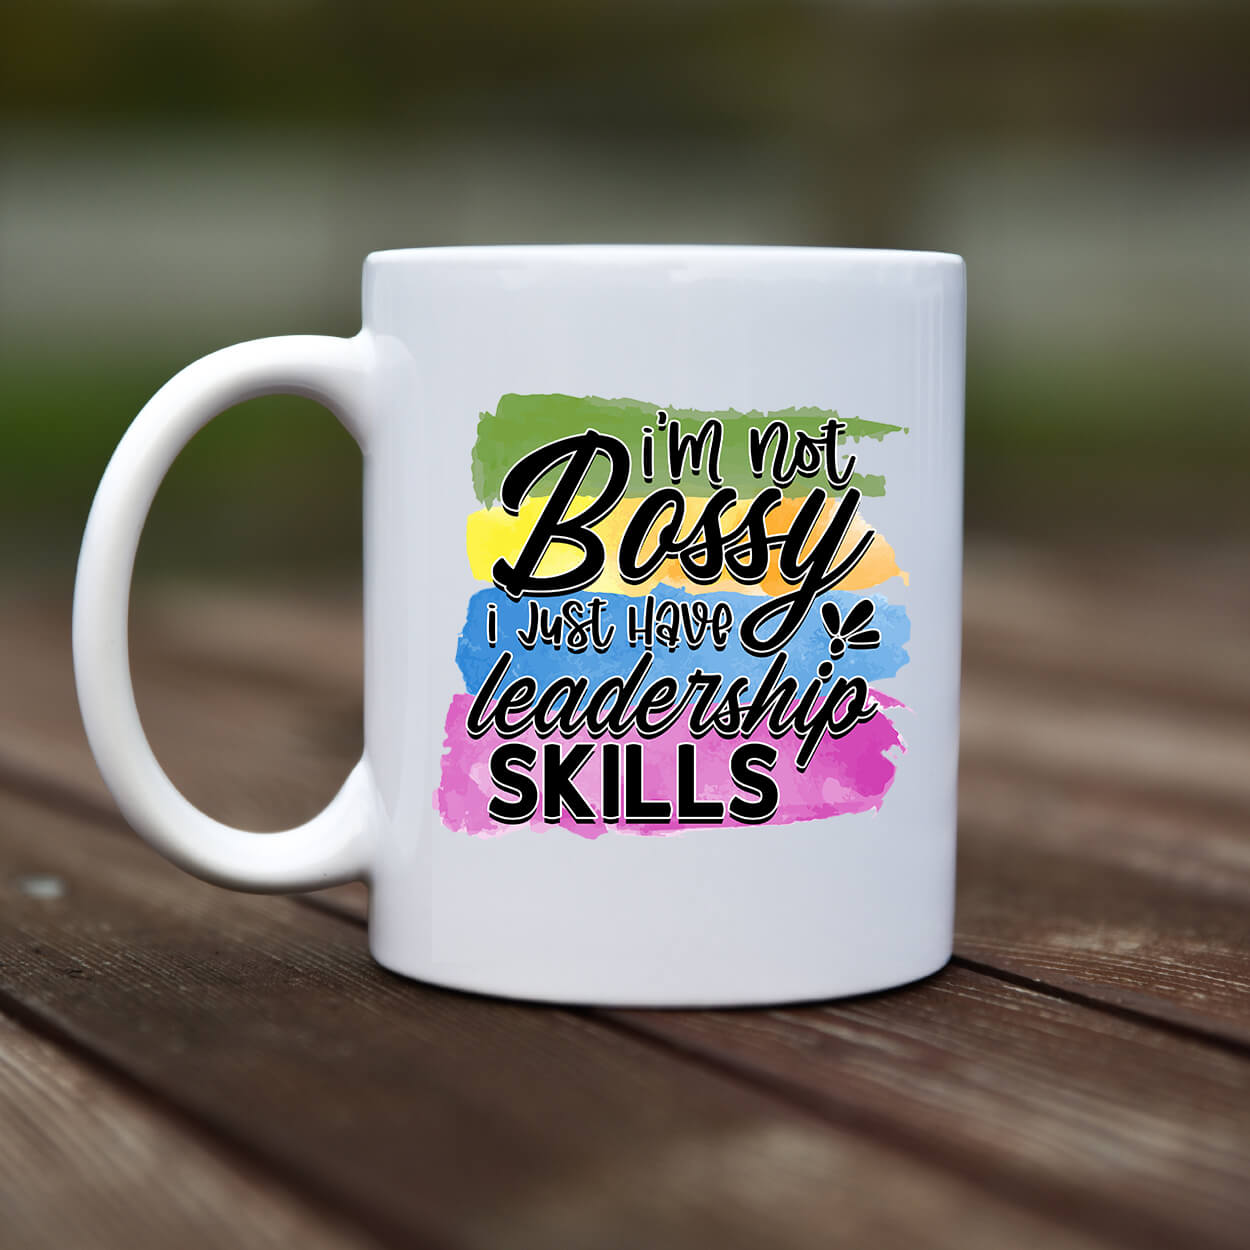 Mug - Im not bossy i just have leadership skills - rvdesignprint